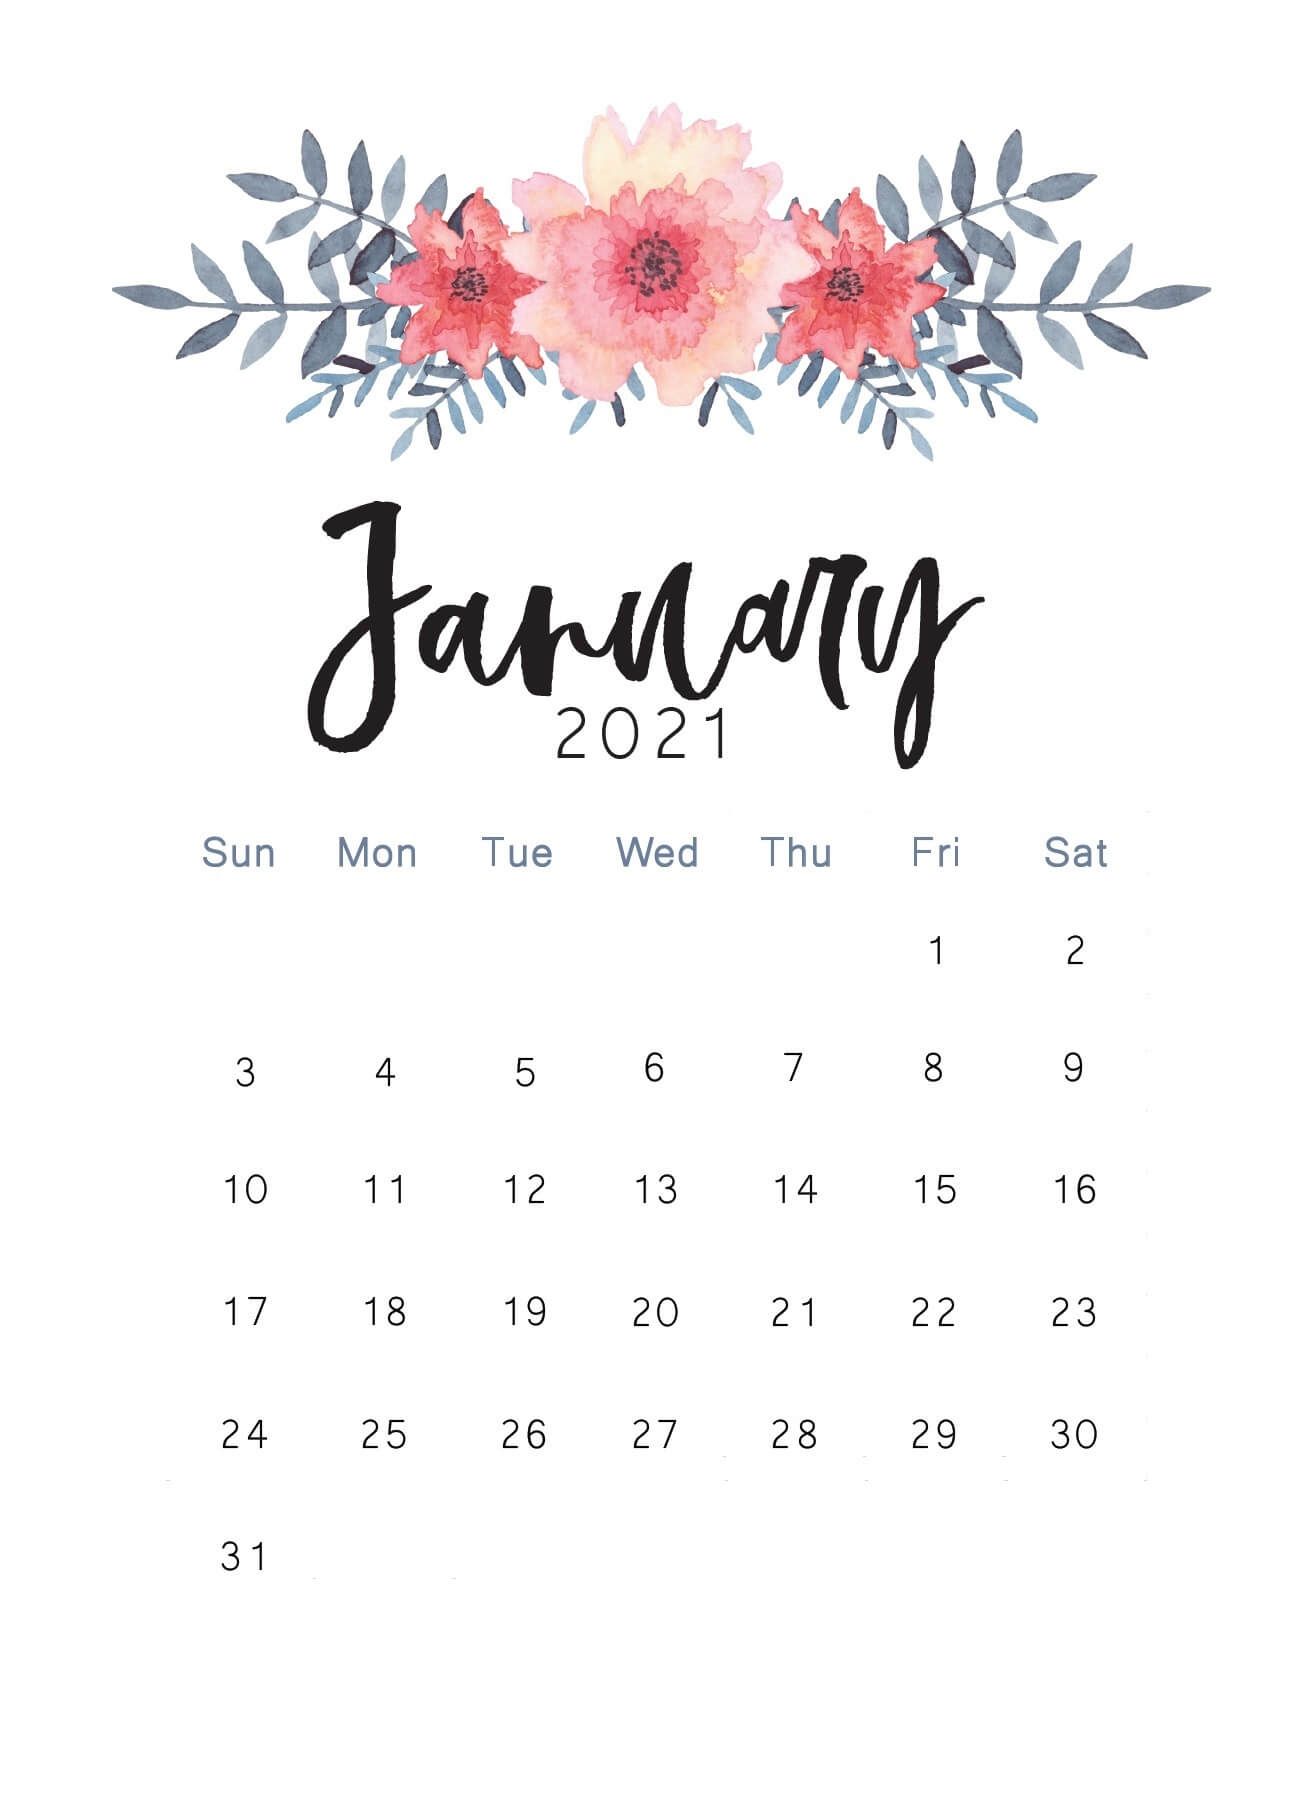 January 2021 Calendar Wallpaper Hd Image ID 10